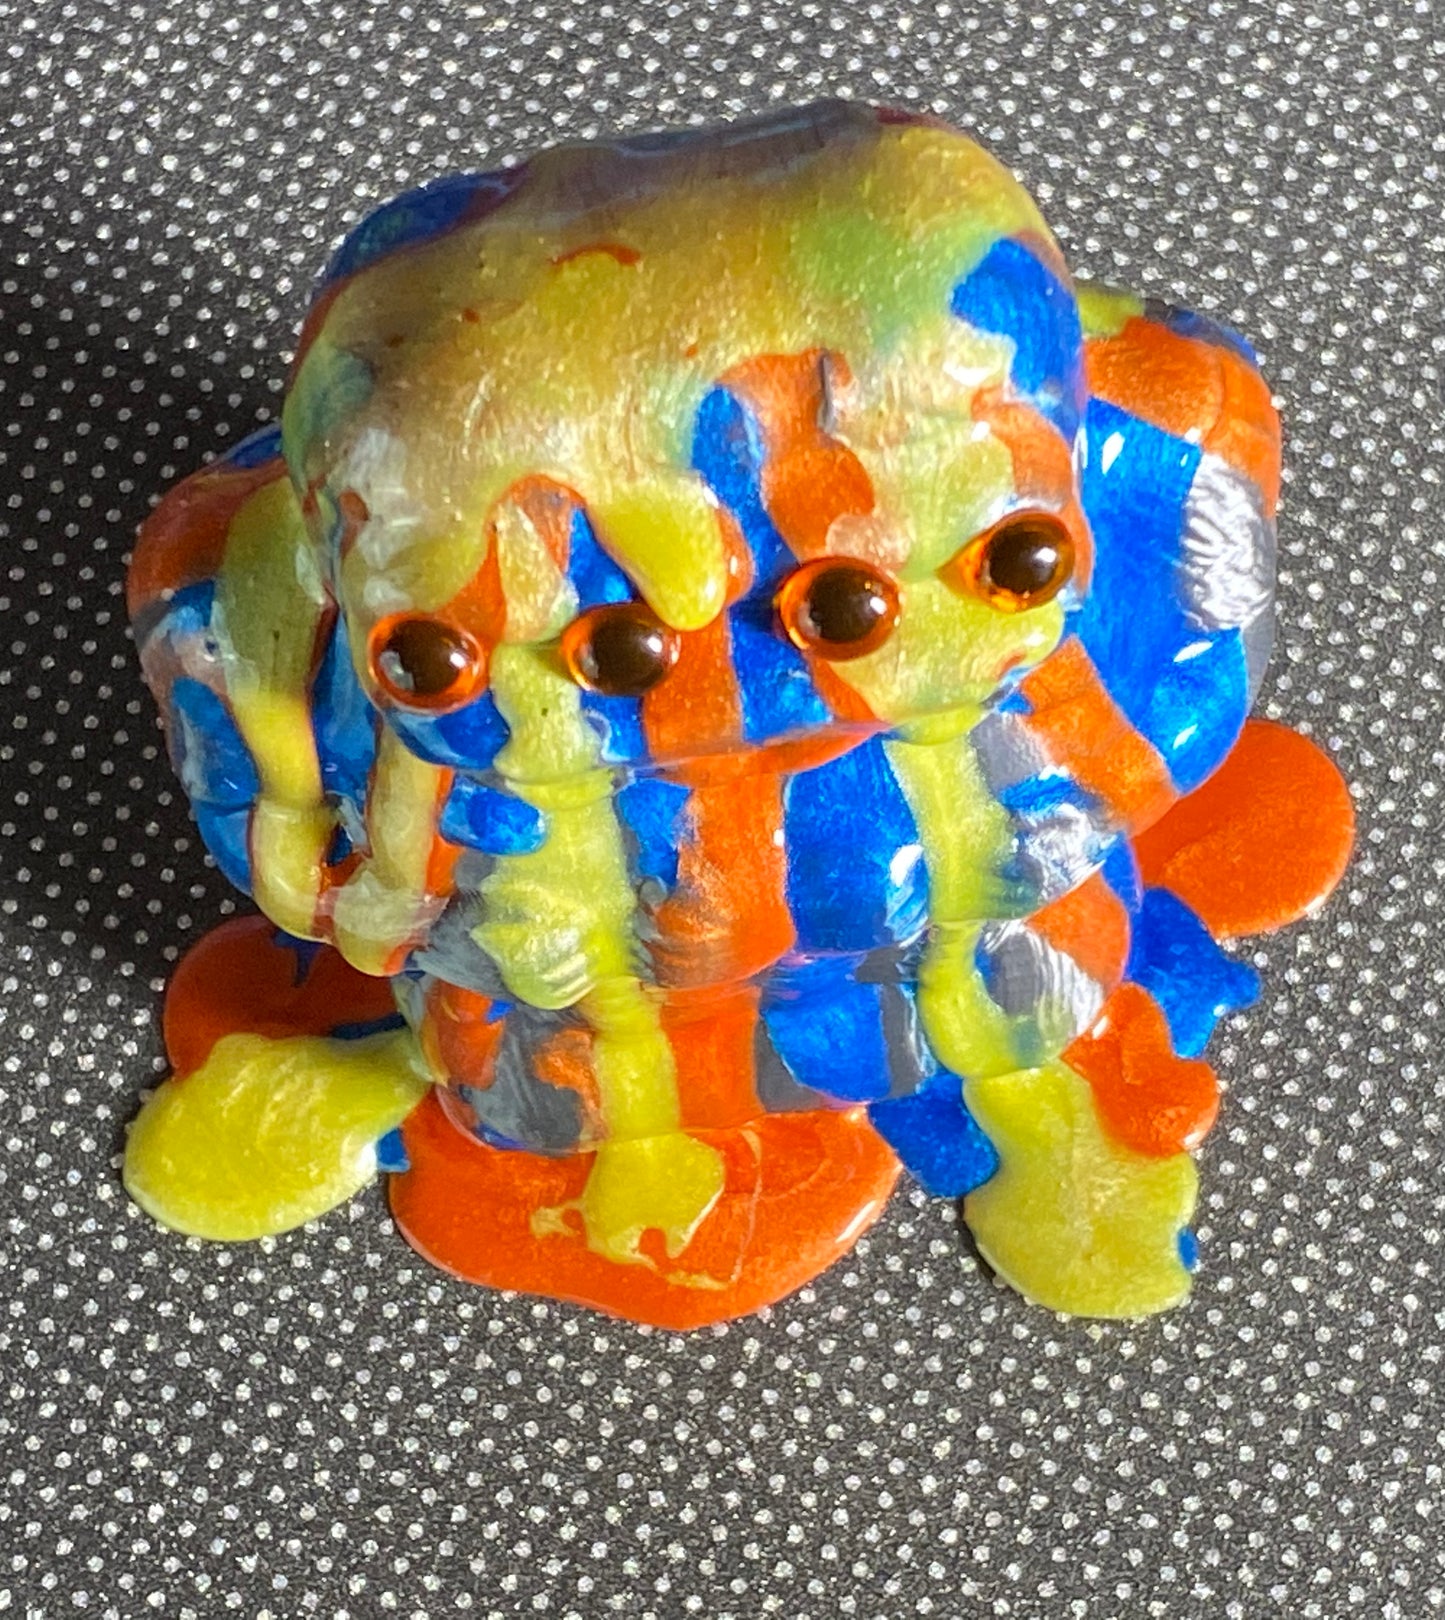 Freak of Nature 3 Headed Ape: Color Dump, Pearlescent Blue, Yellow, Orange